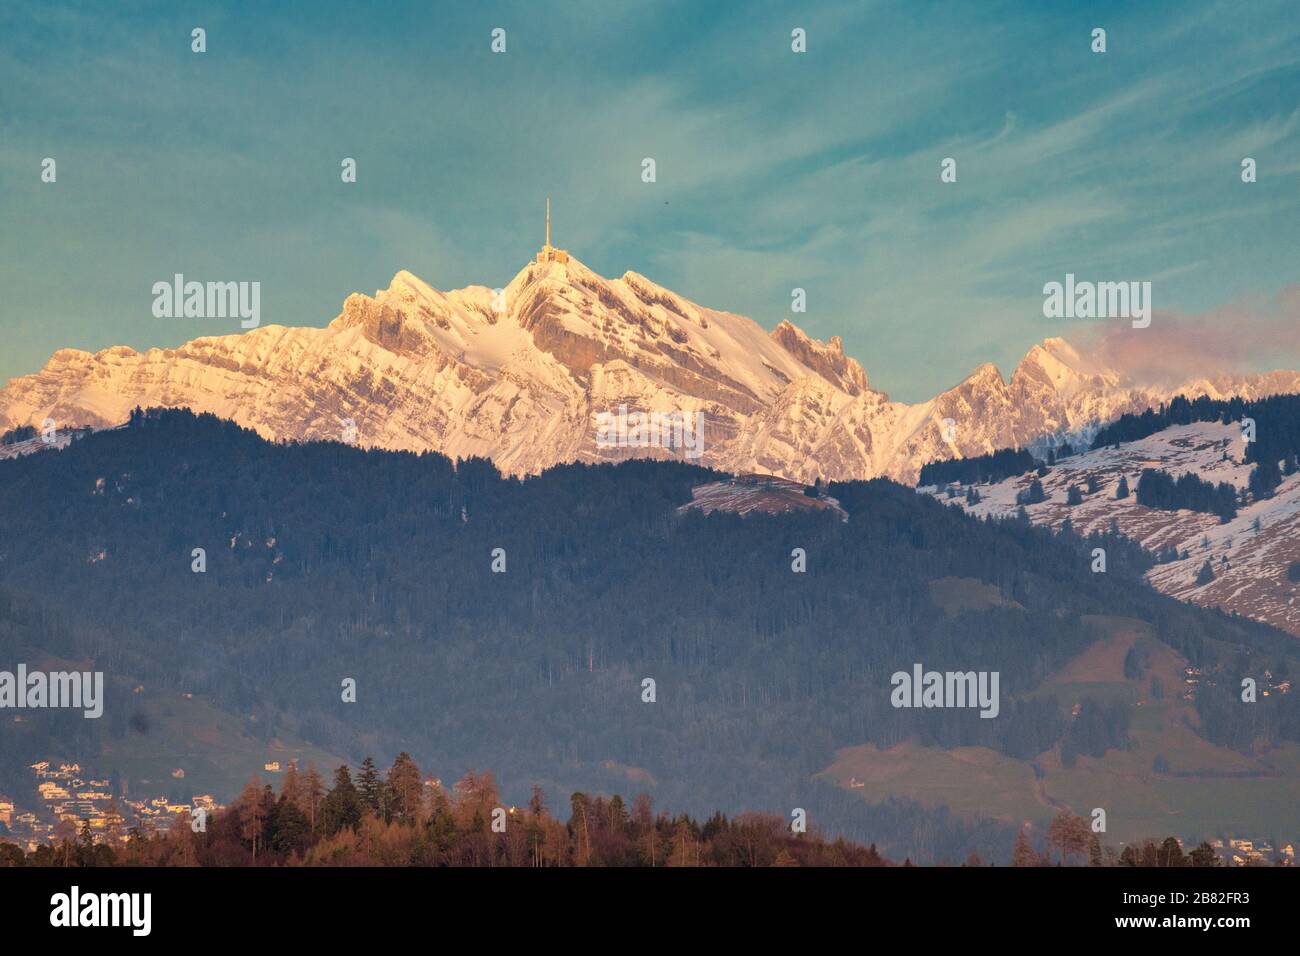 Distant view of the Santis Peak, the highest mountain in the Alpstein massif, Appenzell Alps, northeastern Switzerland. Stock Photo